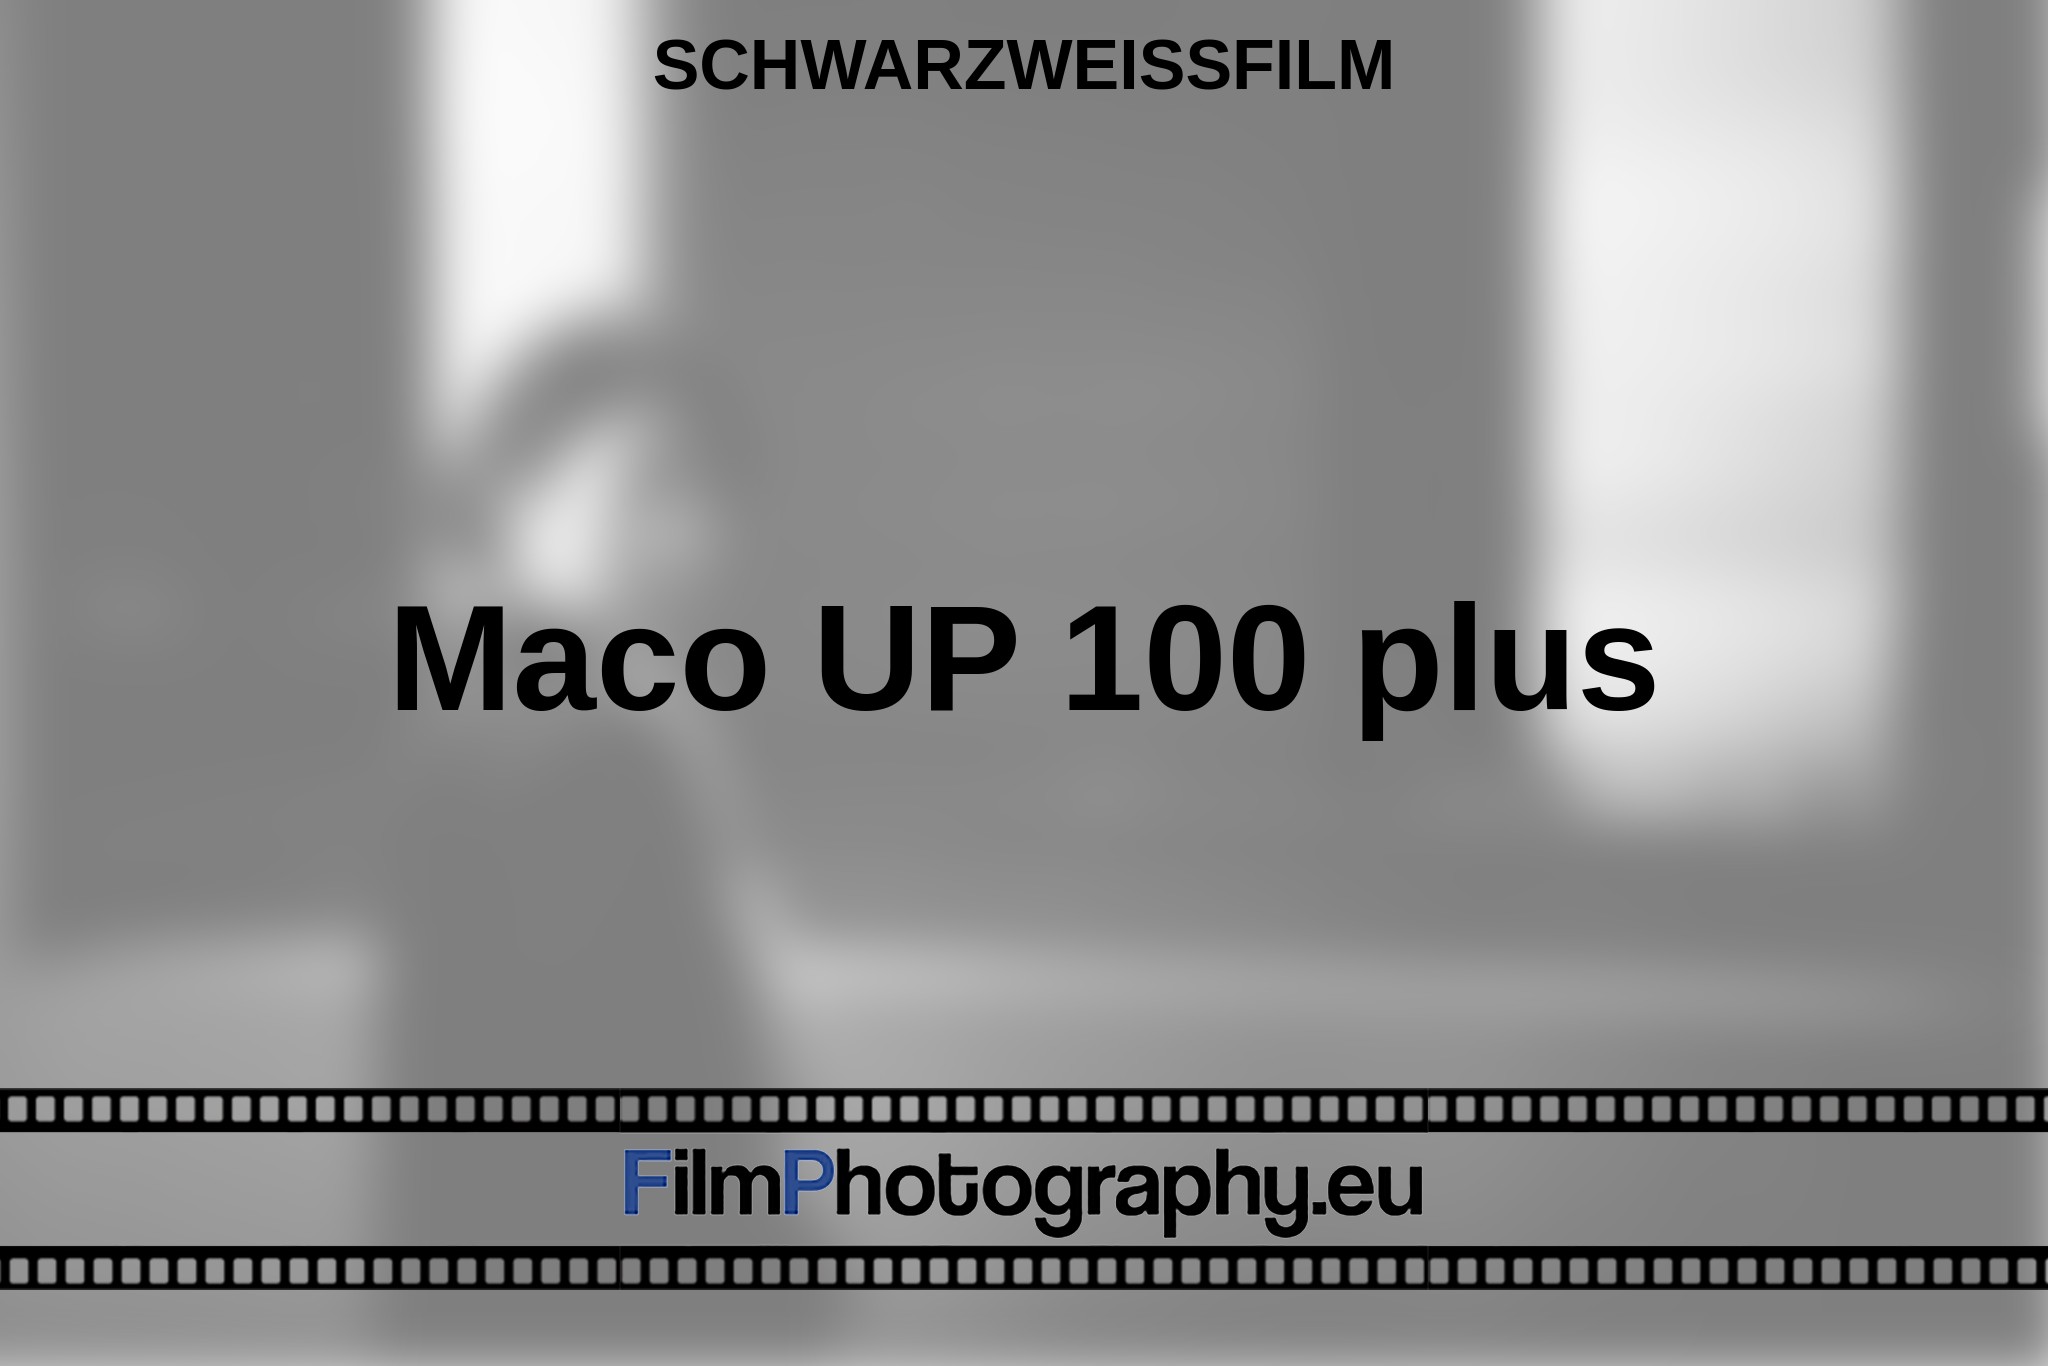 maco-up-100-plus-schwarzweißfilm-bnv.jpg